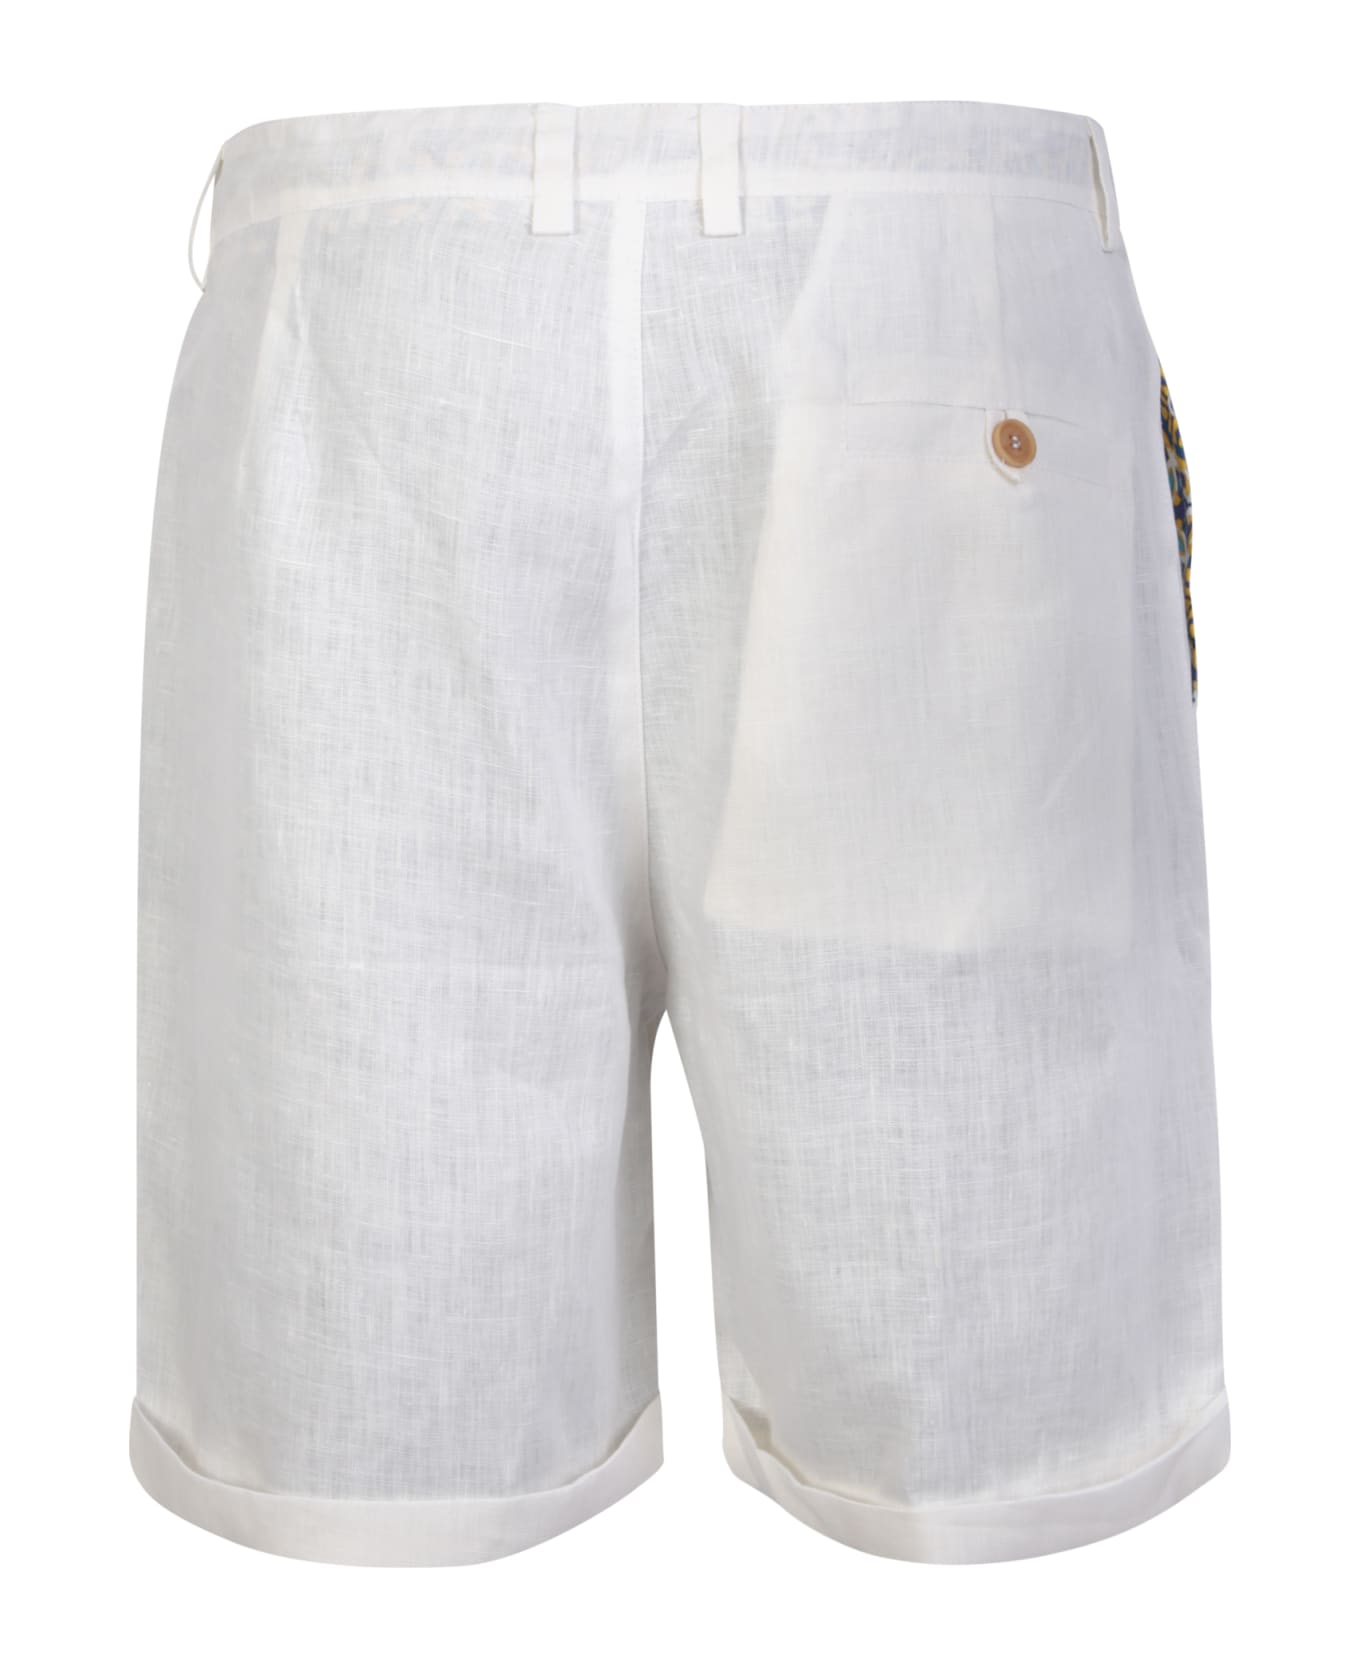 Peninsula Swimwear Marzamemi Linen White Shorts - White